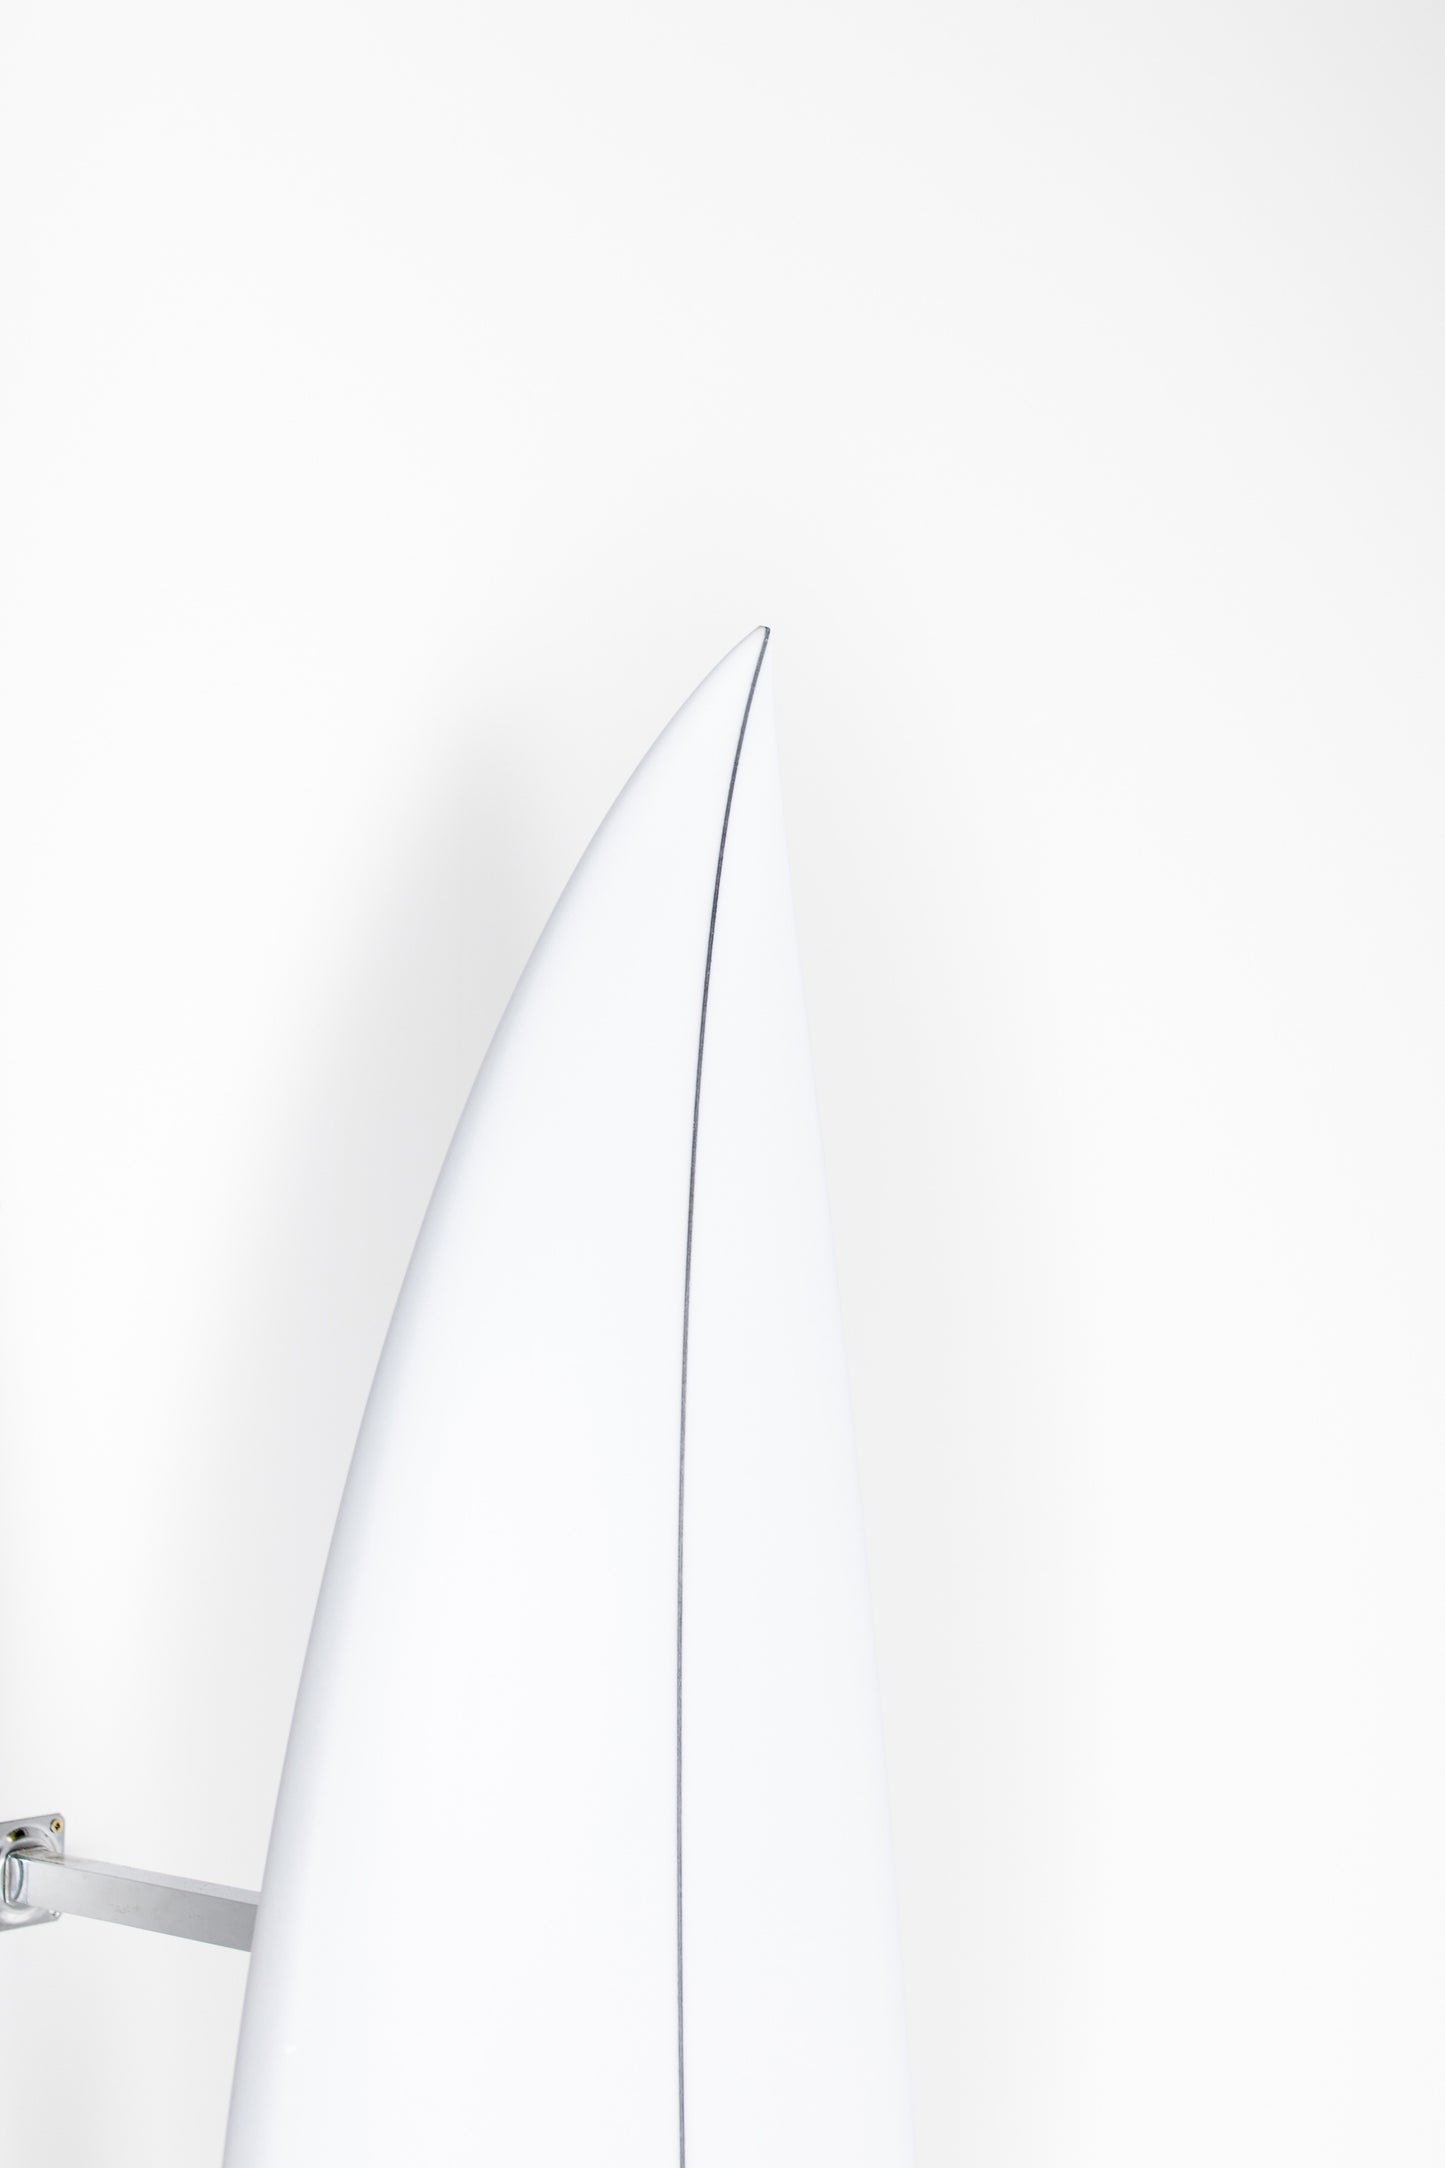 
                  
                    Pukas Surf Shop - Pukas Surfboard - DARK by Axel Lorentz - 6’2” x 19,75 x 2,43 - 31,61L - AX06155
                  
                